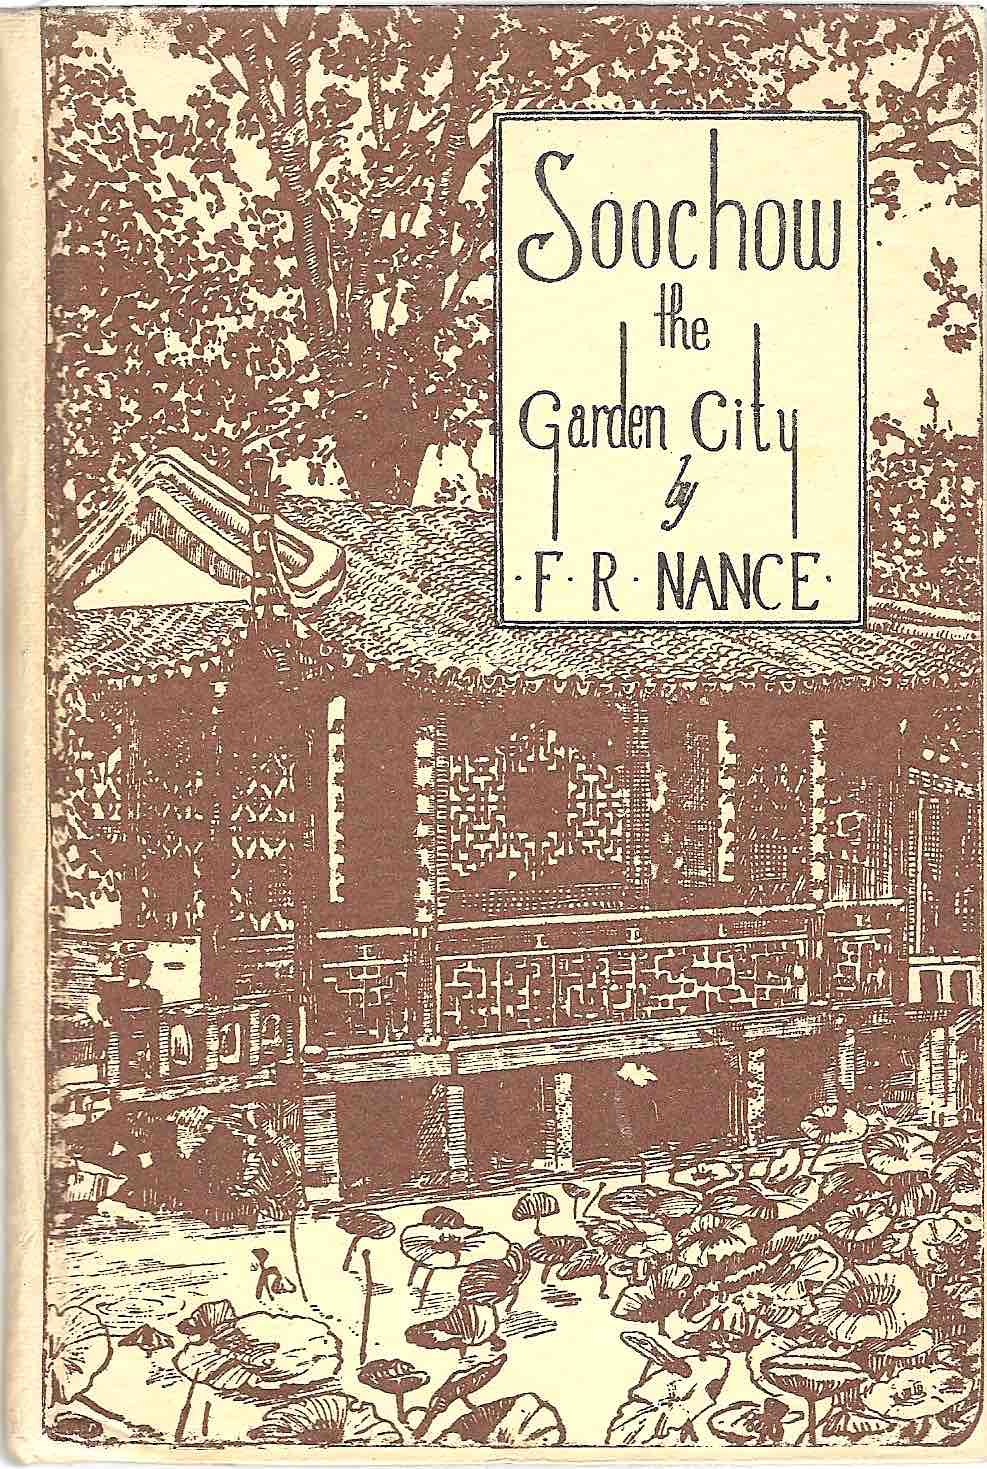 NANCE, FLORENCE RUSH (Born Keiser): - Soochow the Garden City. Shanghai; Hong Kong; Singapore, Kelly & Walsh, Ltd, 1936.